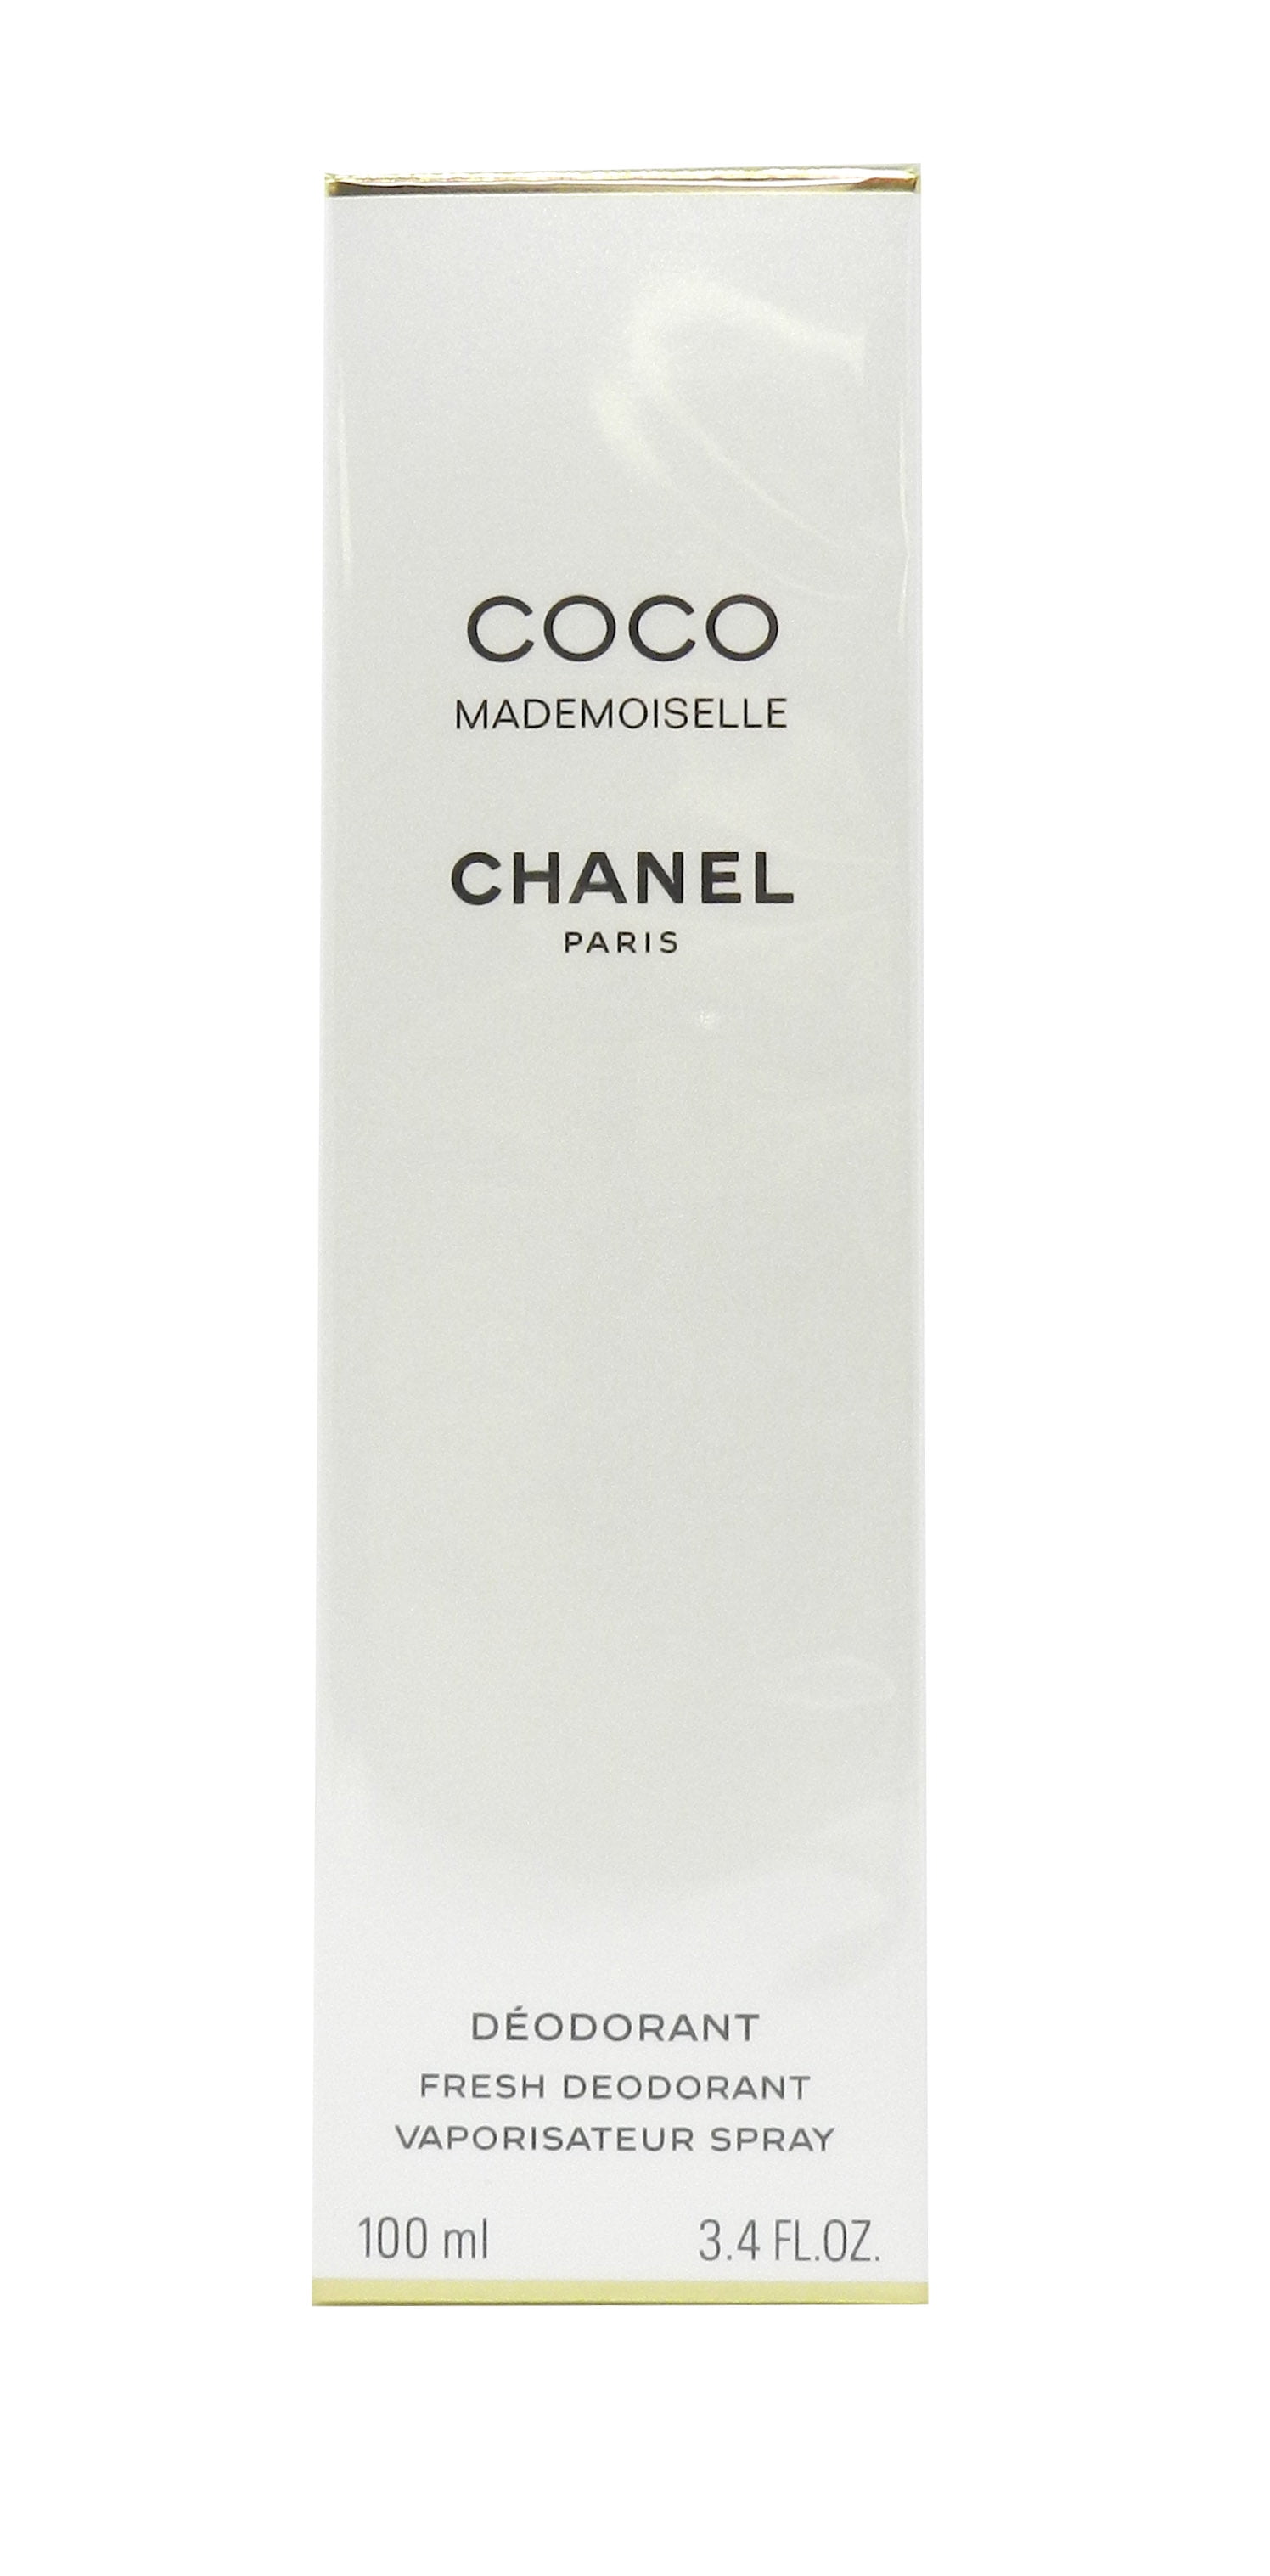 CHANEL Coco Mademoiselle Deodorant Spray shorts chanel  chanelcocomademoiselle chaneldeodorant  YouTube